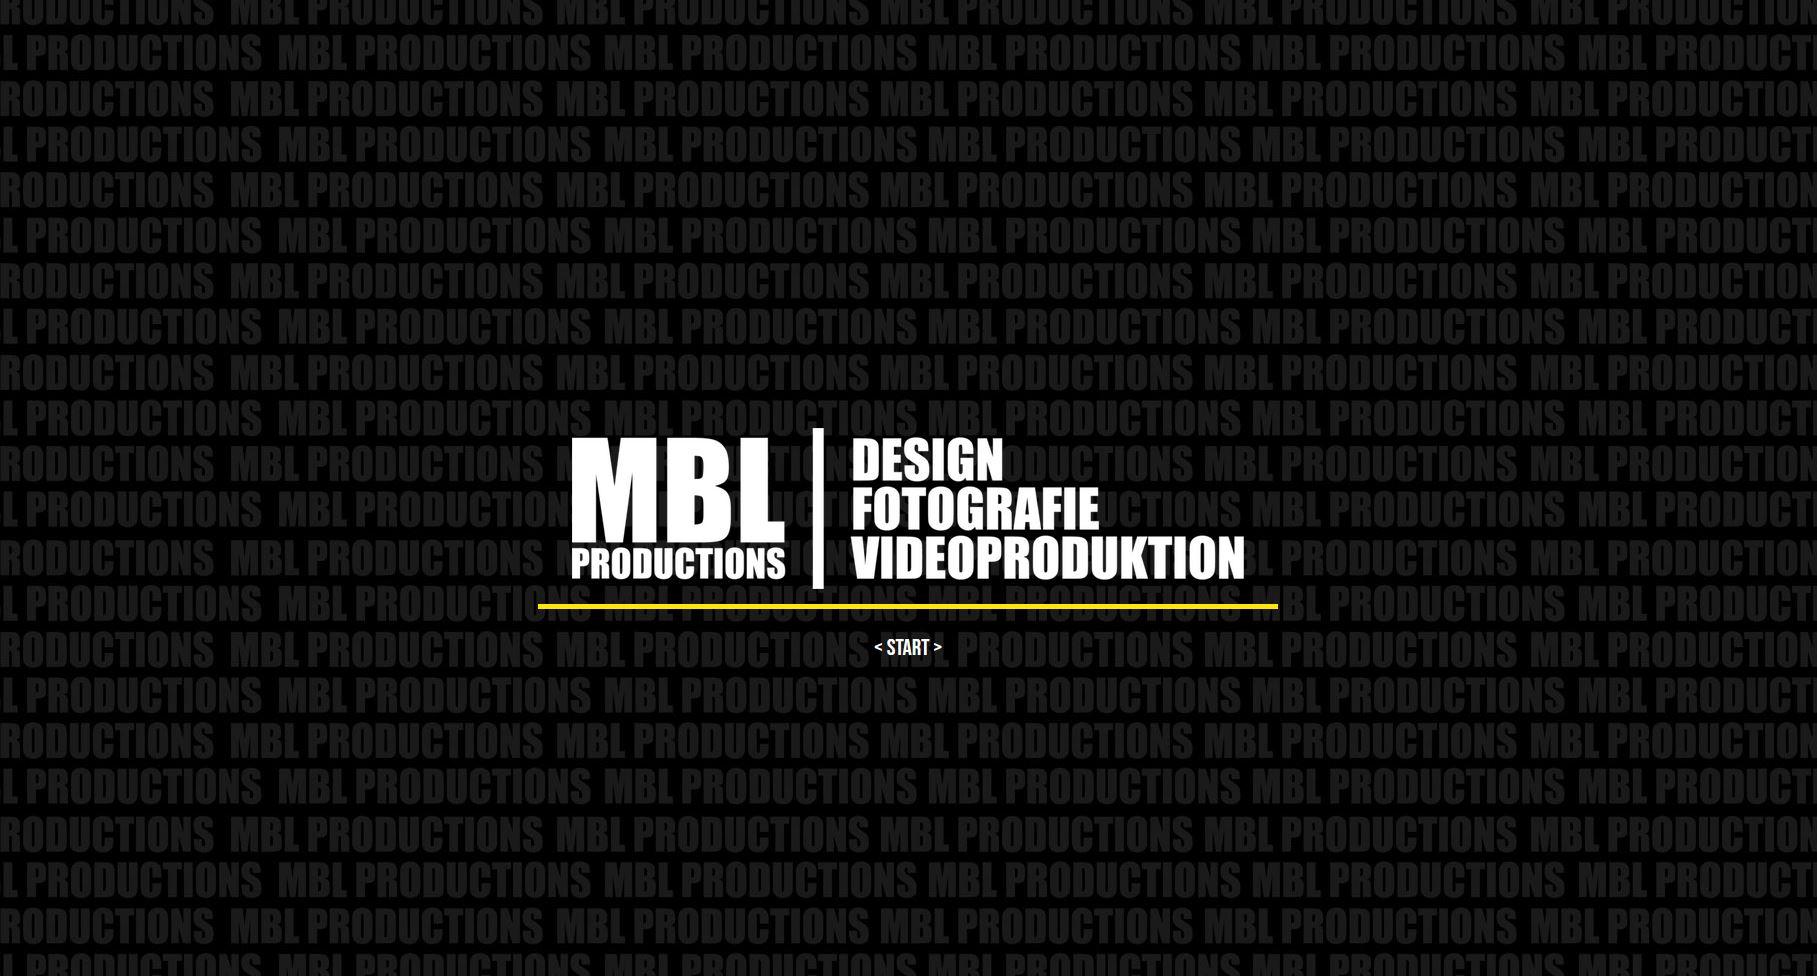 (c) Mbl-productions.at